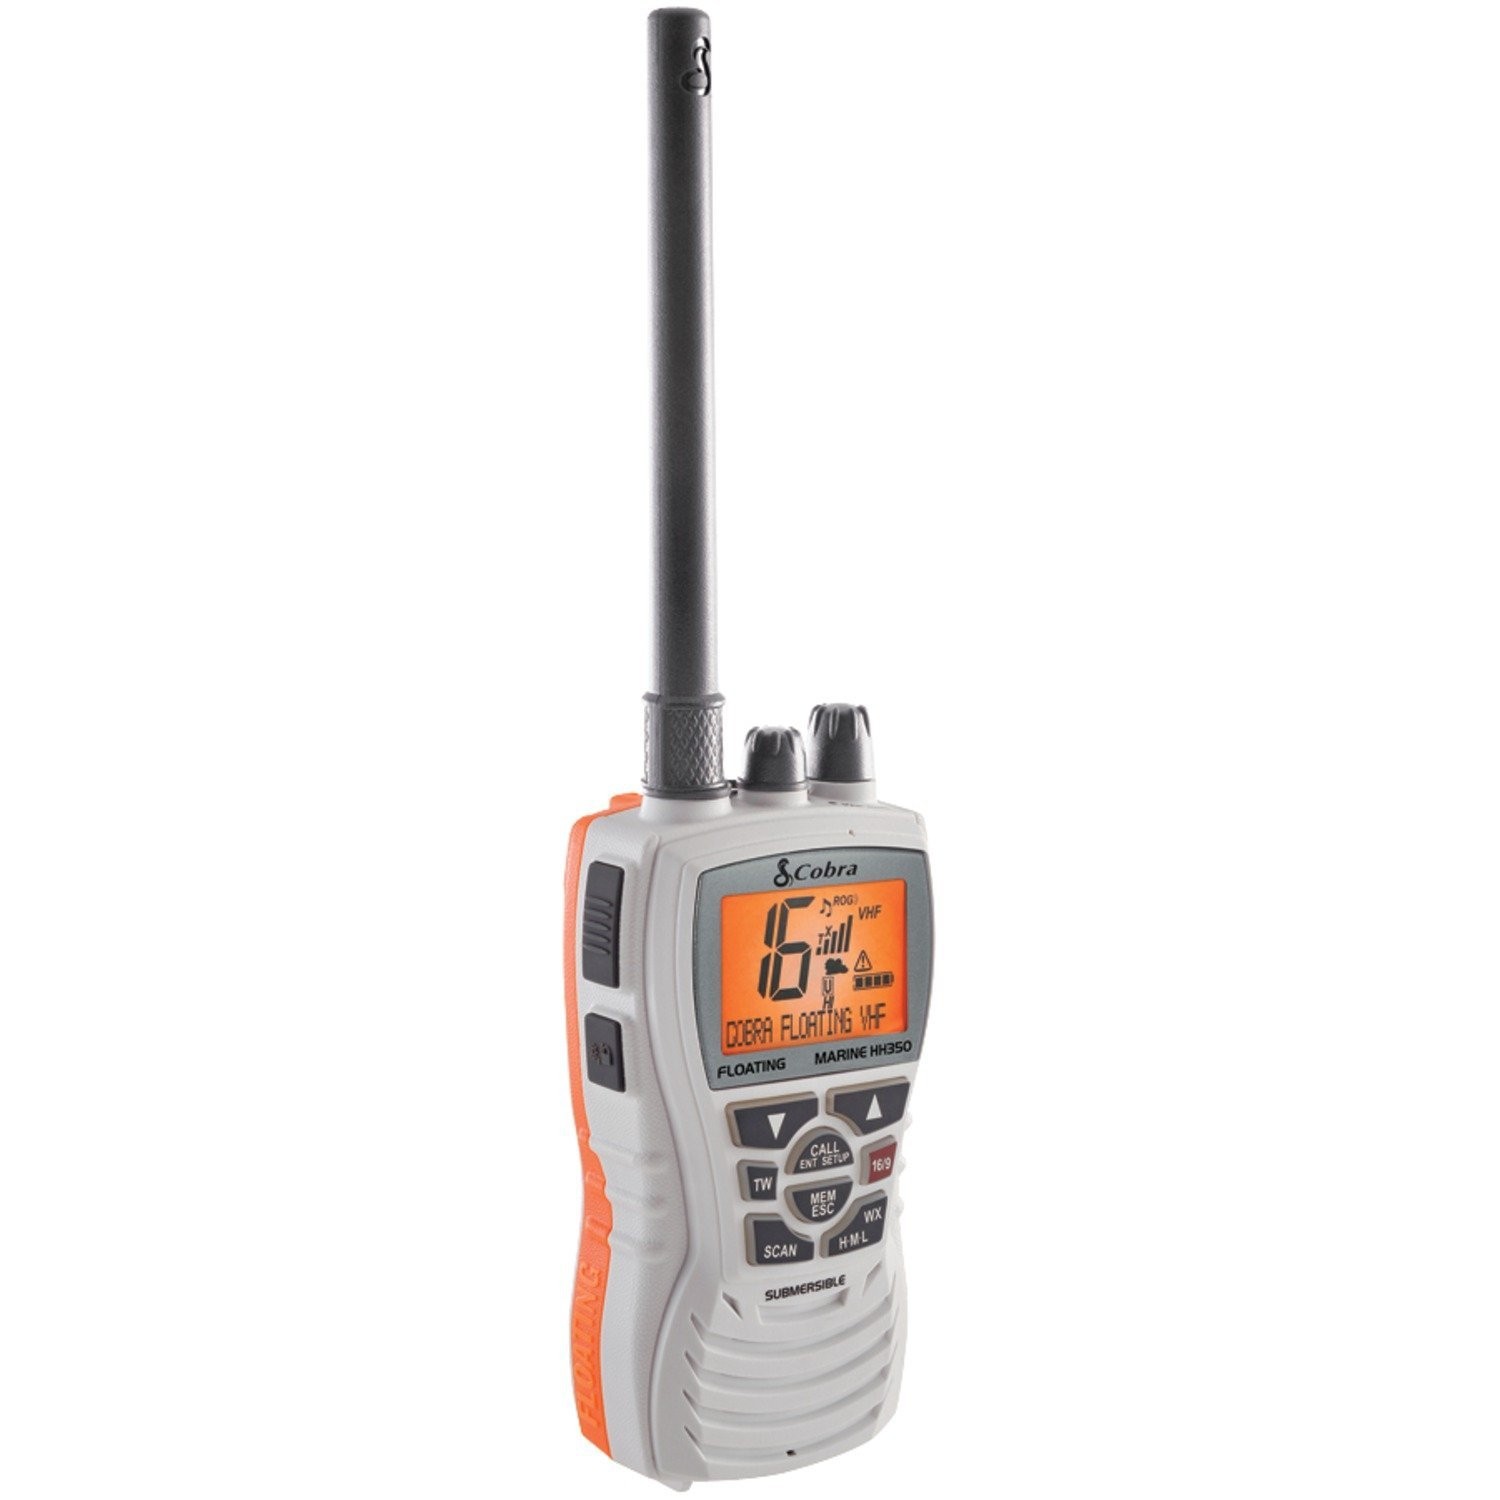 COBRA SELECT MR HH350 W FLT 6-WATT FLOATING VHF RADIO MR HH350W FLT